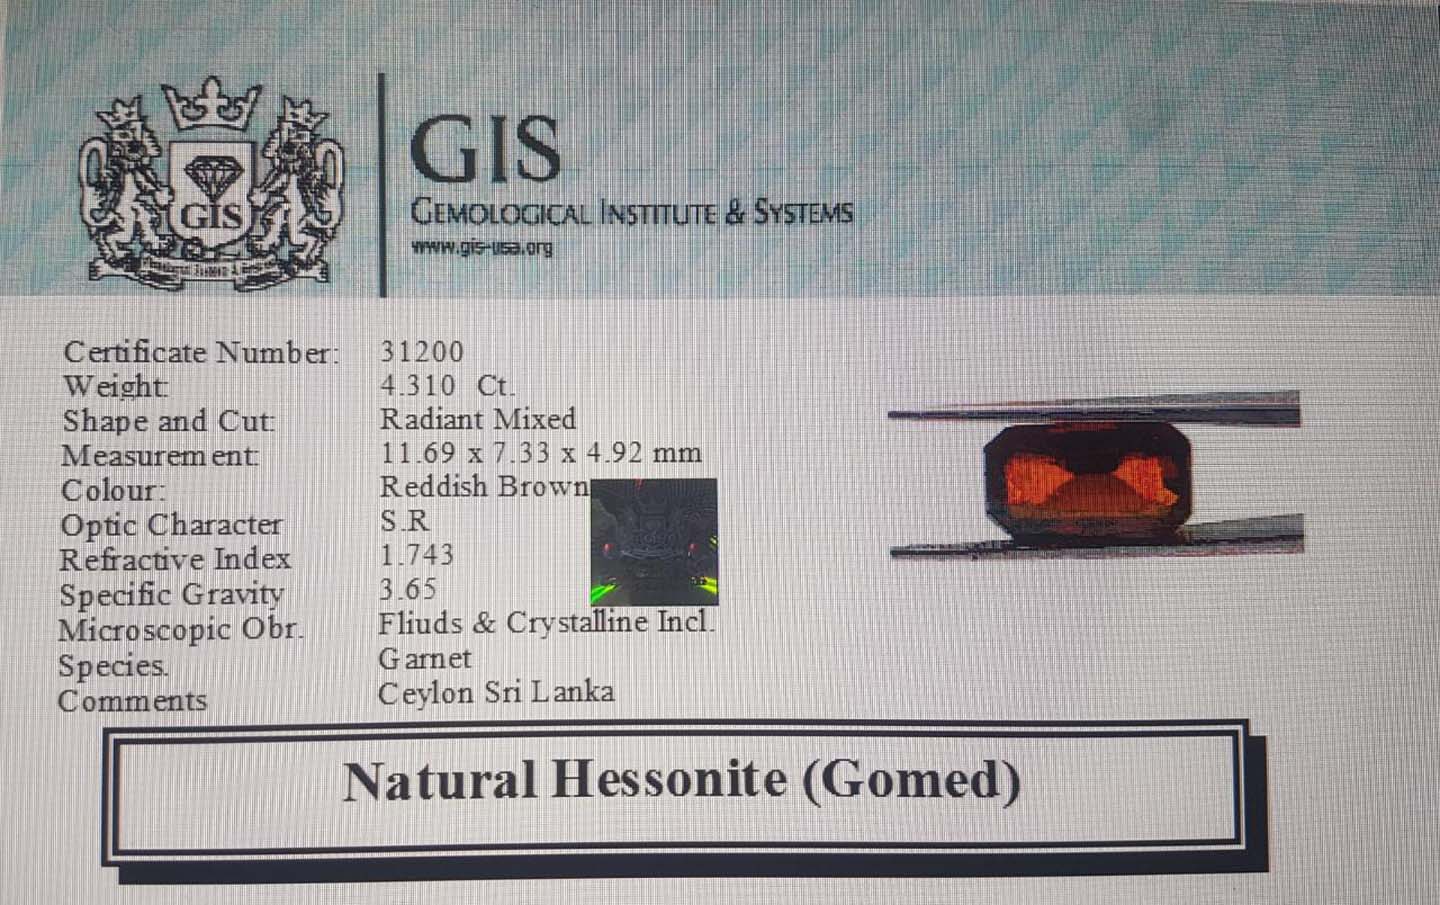 Hessonite (Gomed) 4.31 Ct.